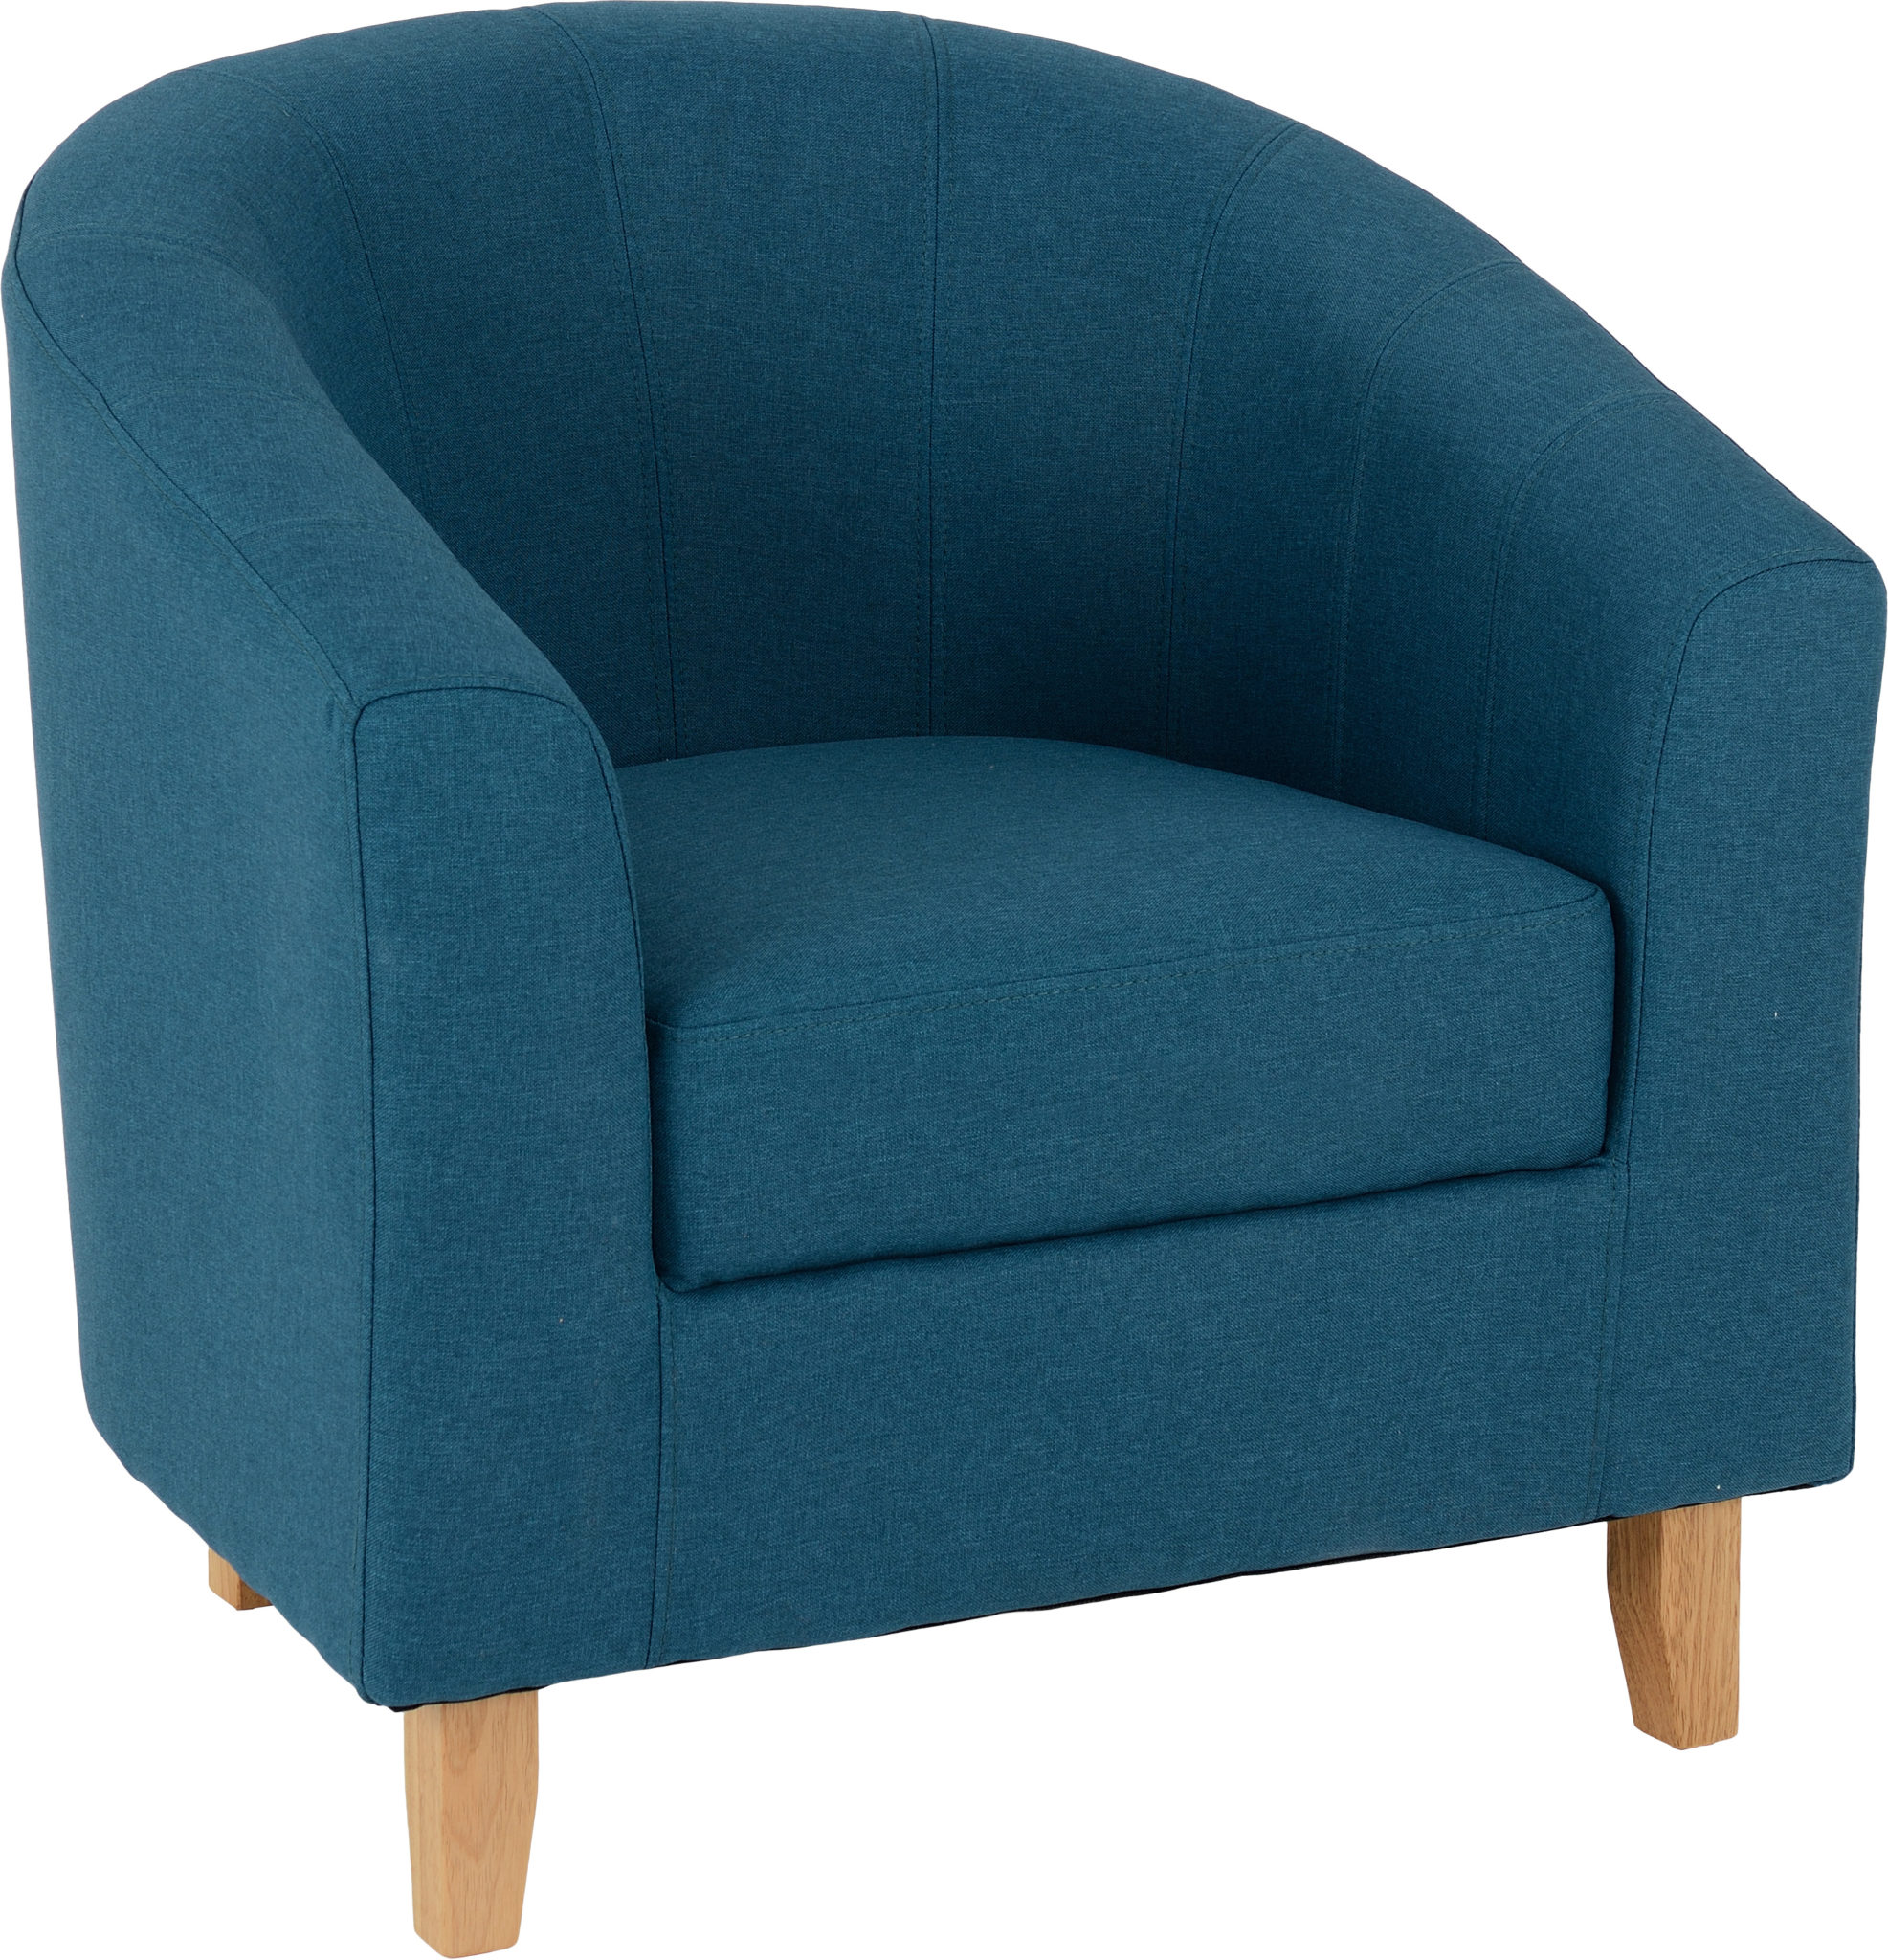 300-309-027 - Tempo Tub Chair - Petrol Blue Fabric - Seconique